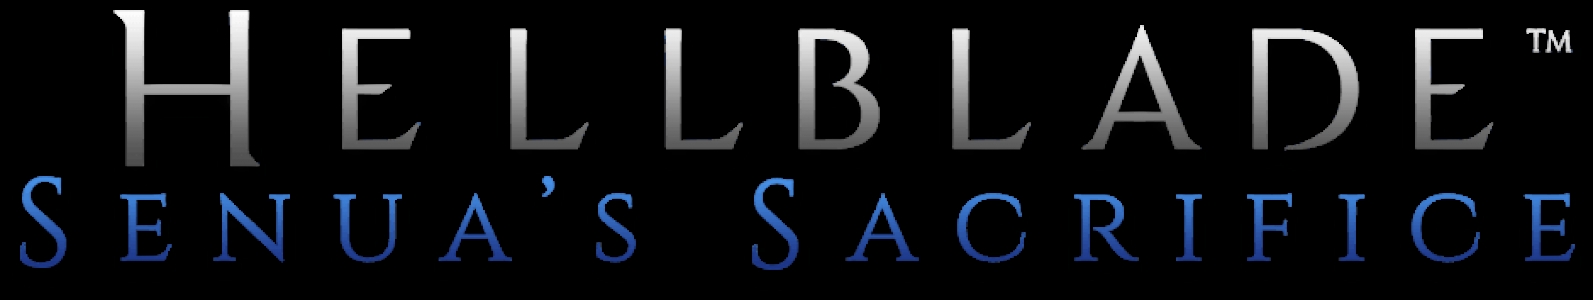 Hellblade: Senua's Sacrifice clearlogo